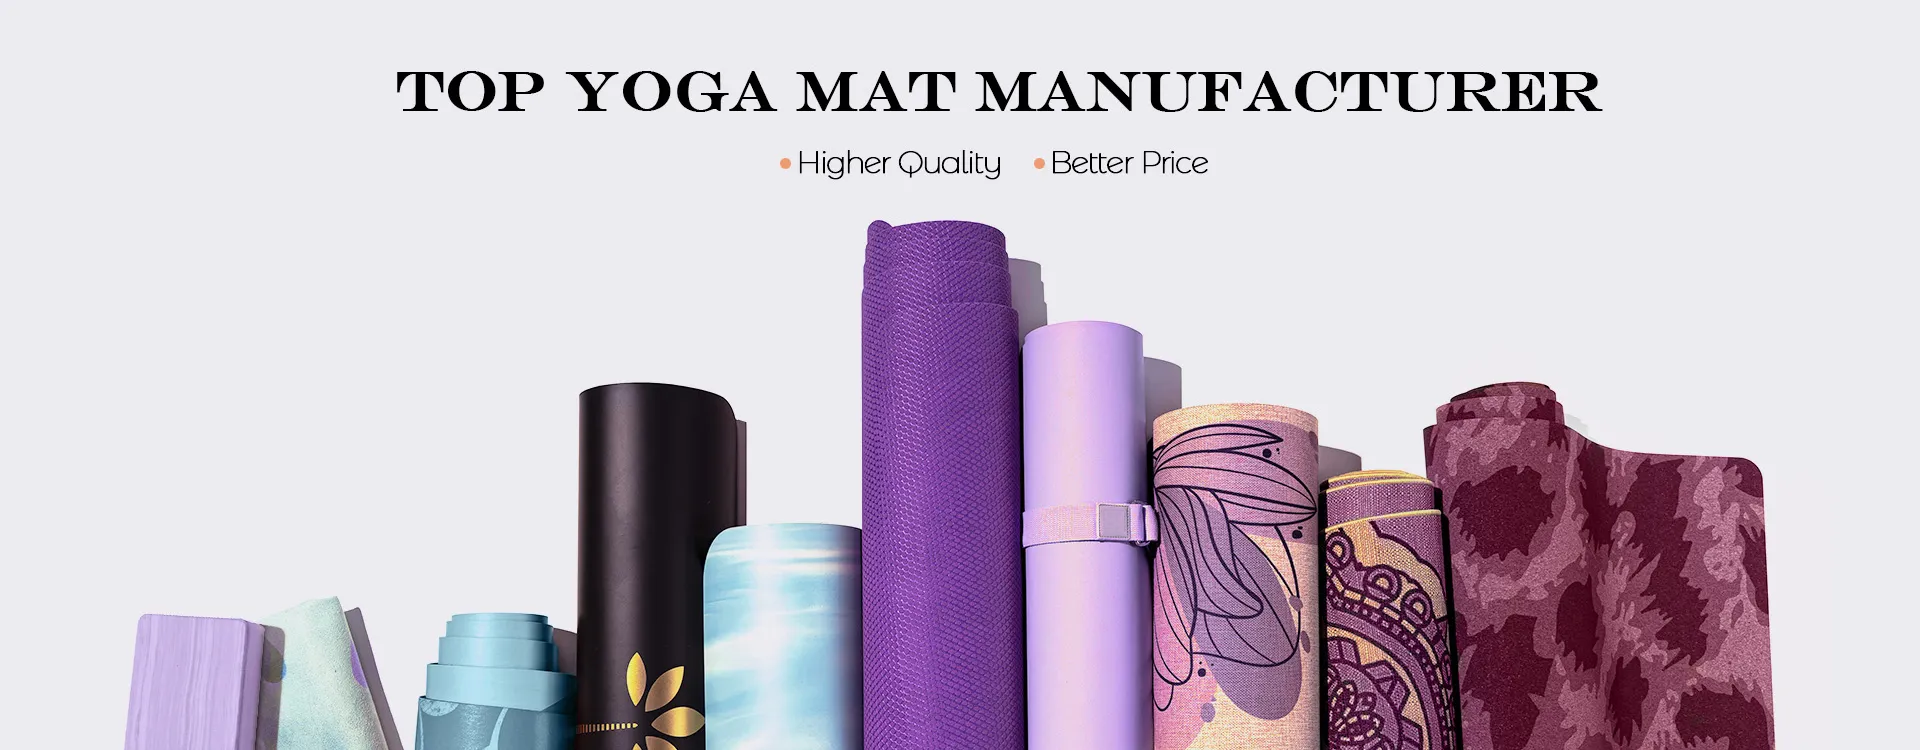 Yoga Mat Wholesale Manufacturer